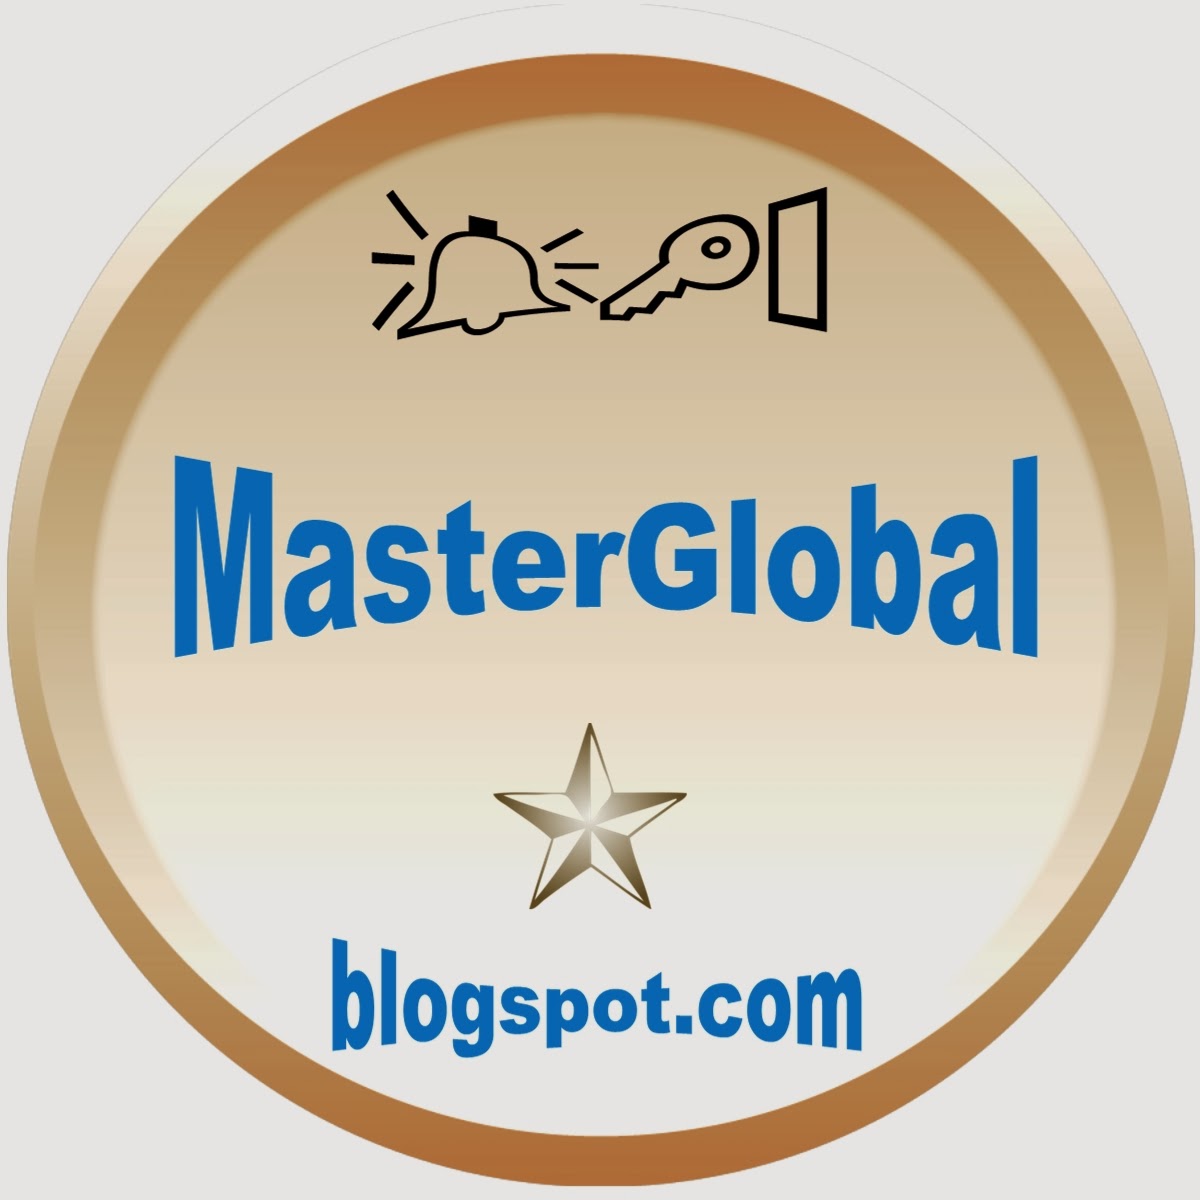 Master Global